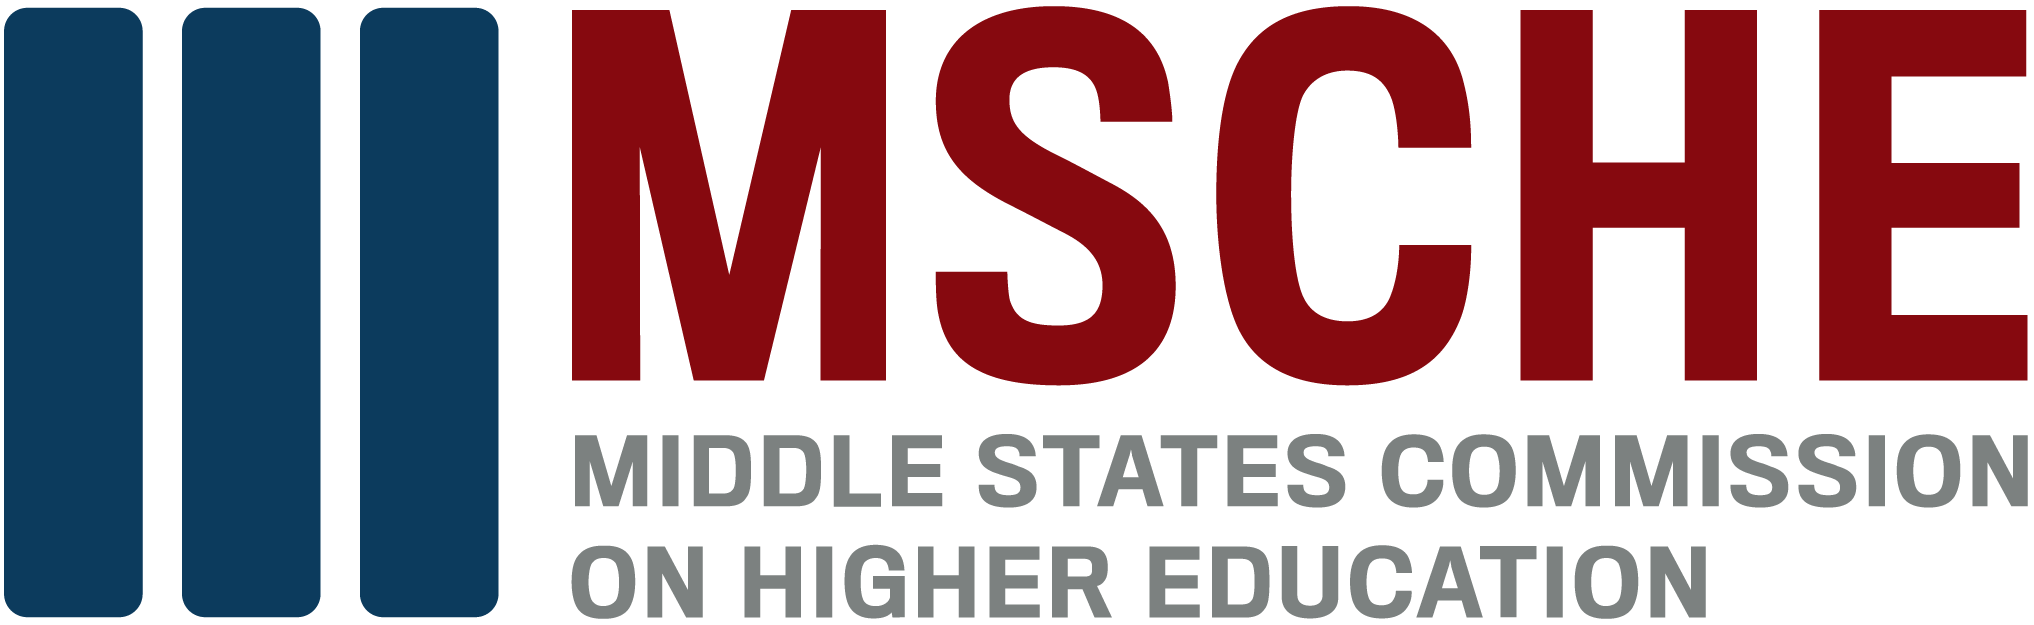 Middlestate logo